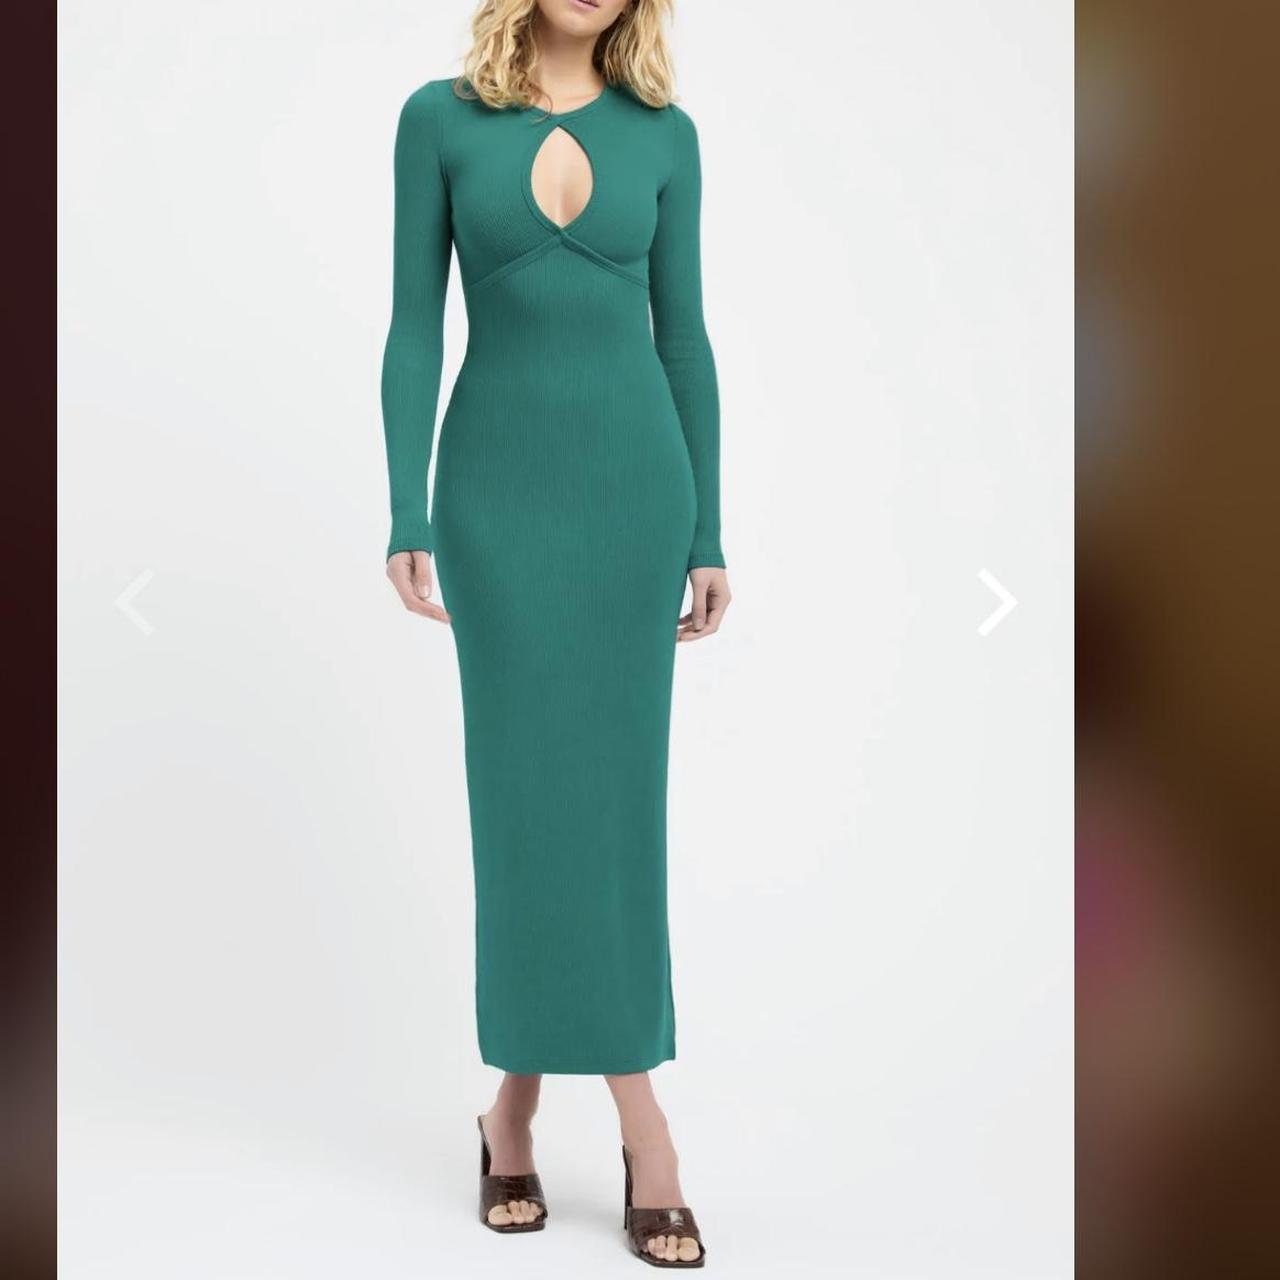 KOOKAÏ Women's Green Dress